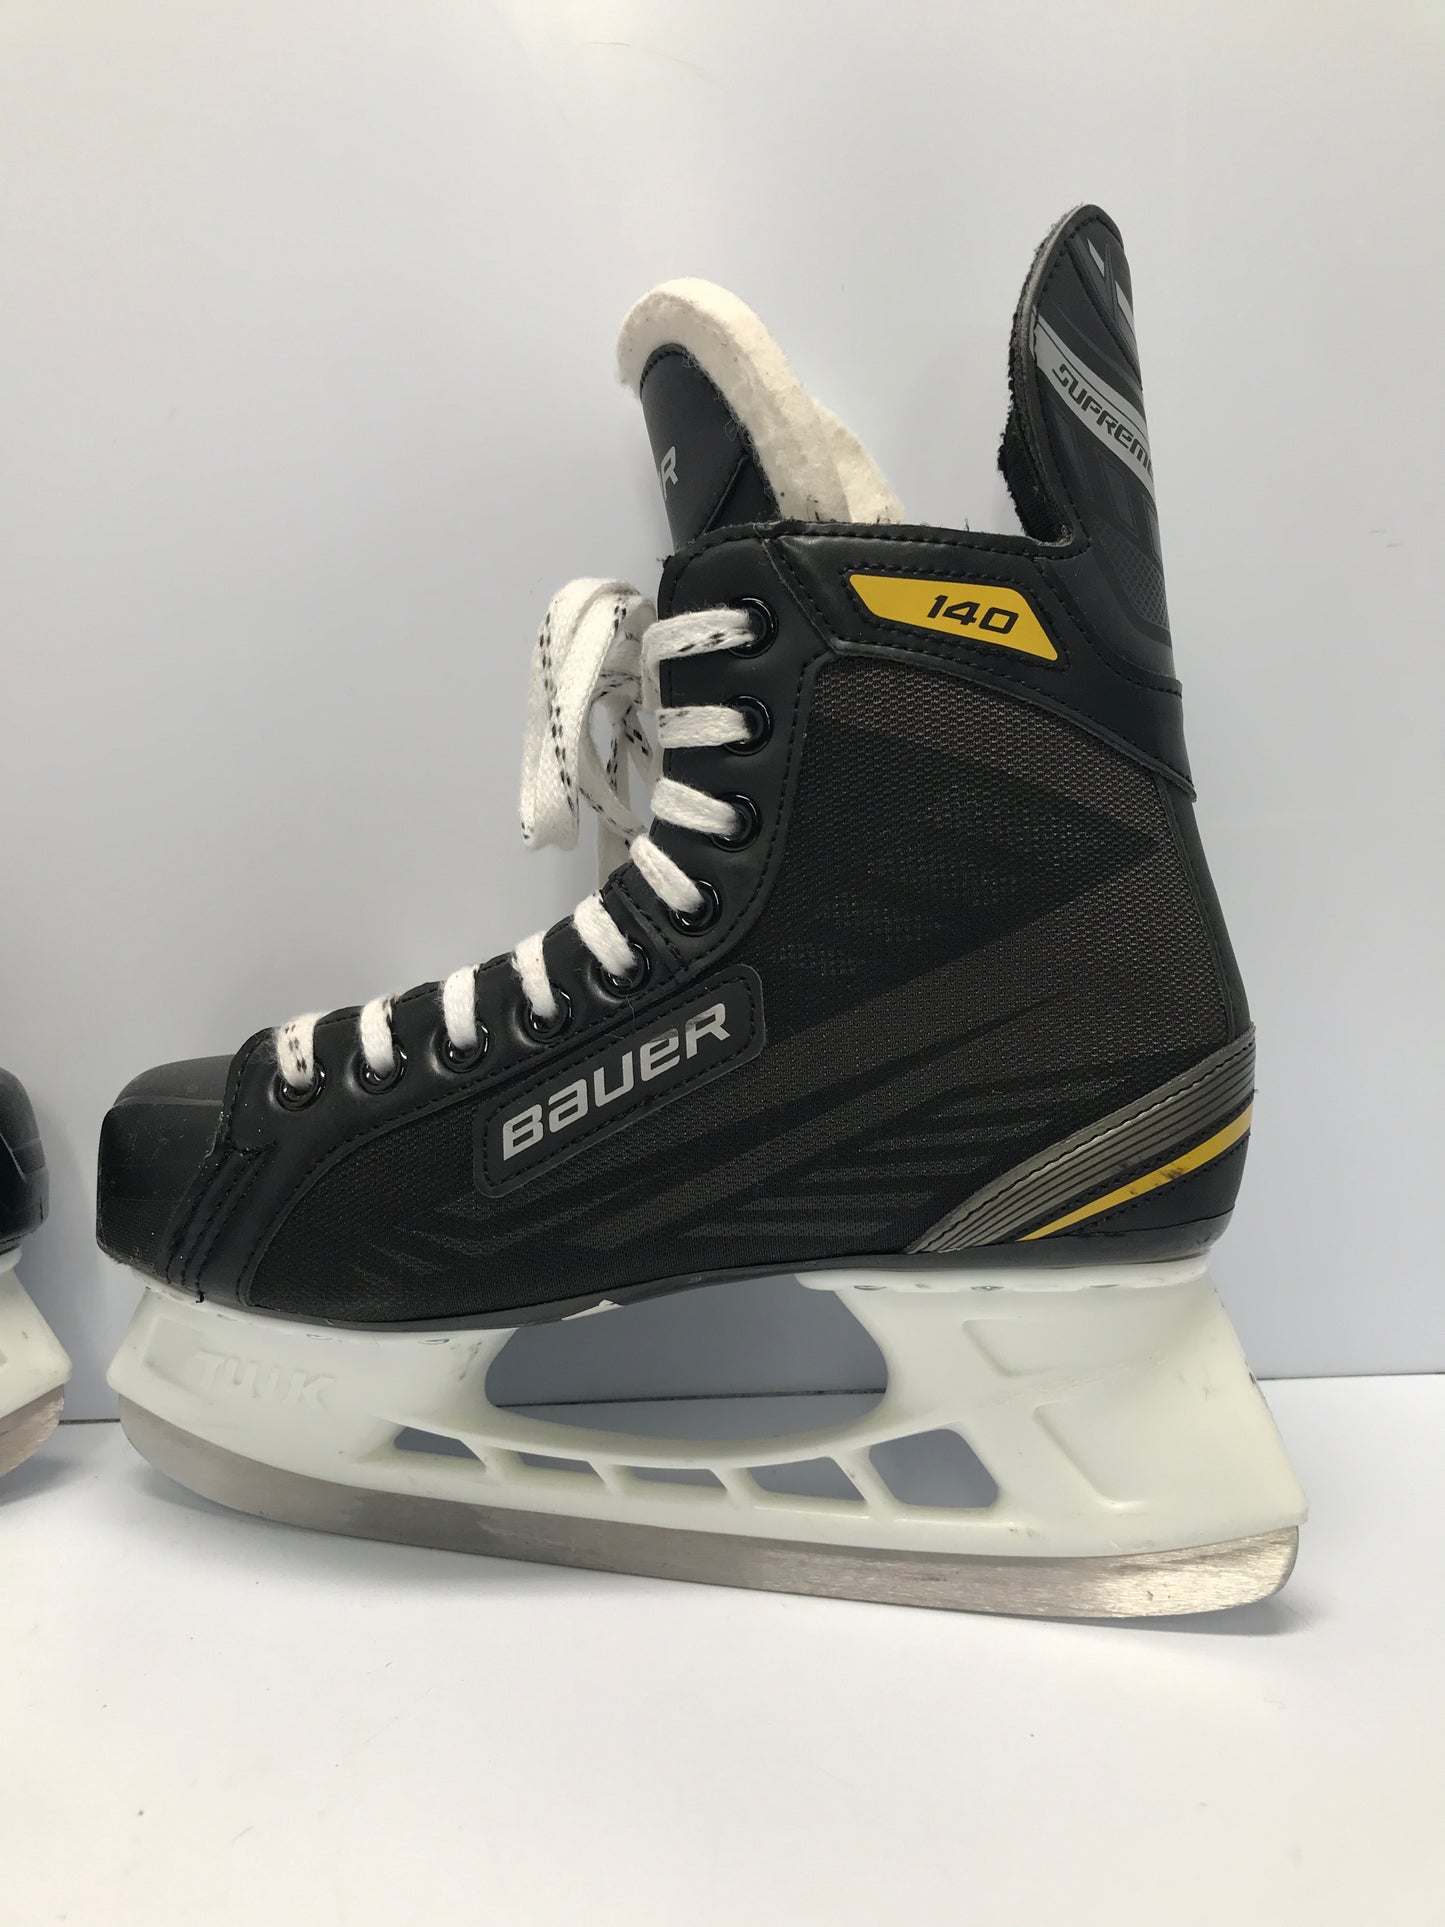 Hockey Skates Men's Senior Size 7.5 Shoe Size 6 Bauer Supreme Like New Worn Once